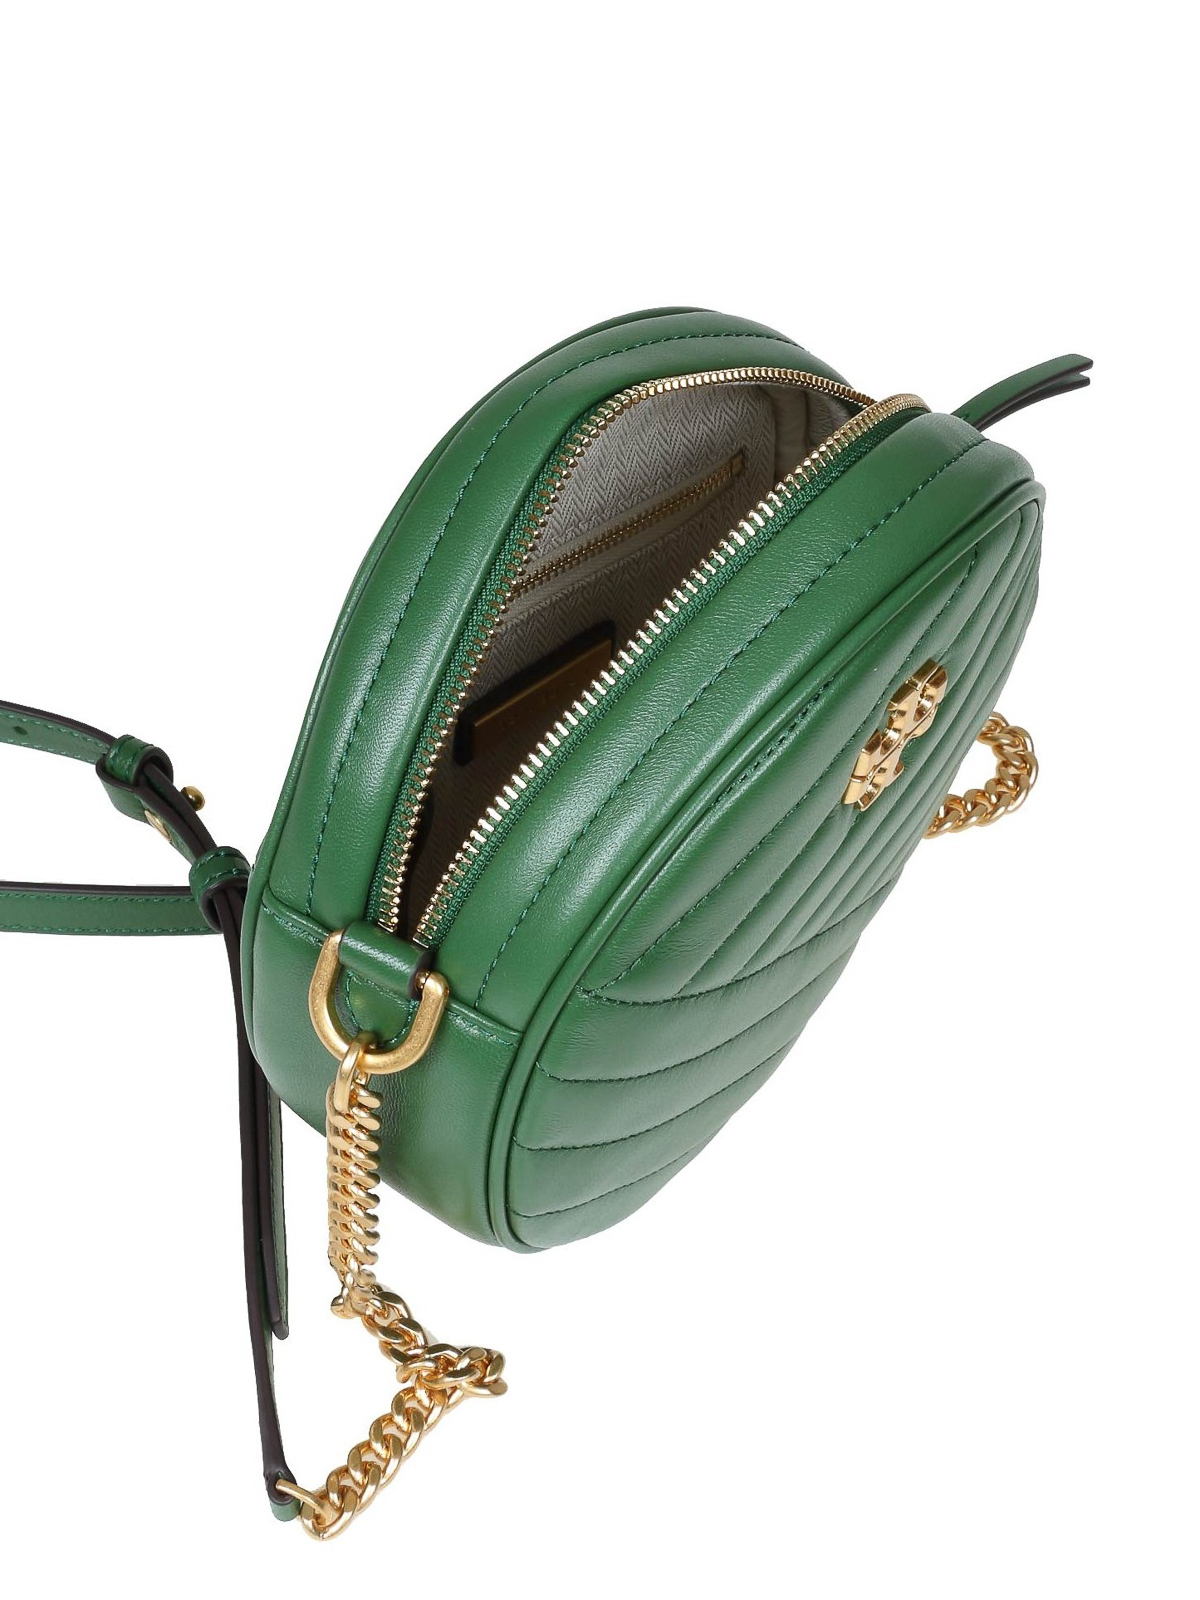 Shop Kira Handbag Collection Online